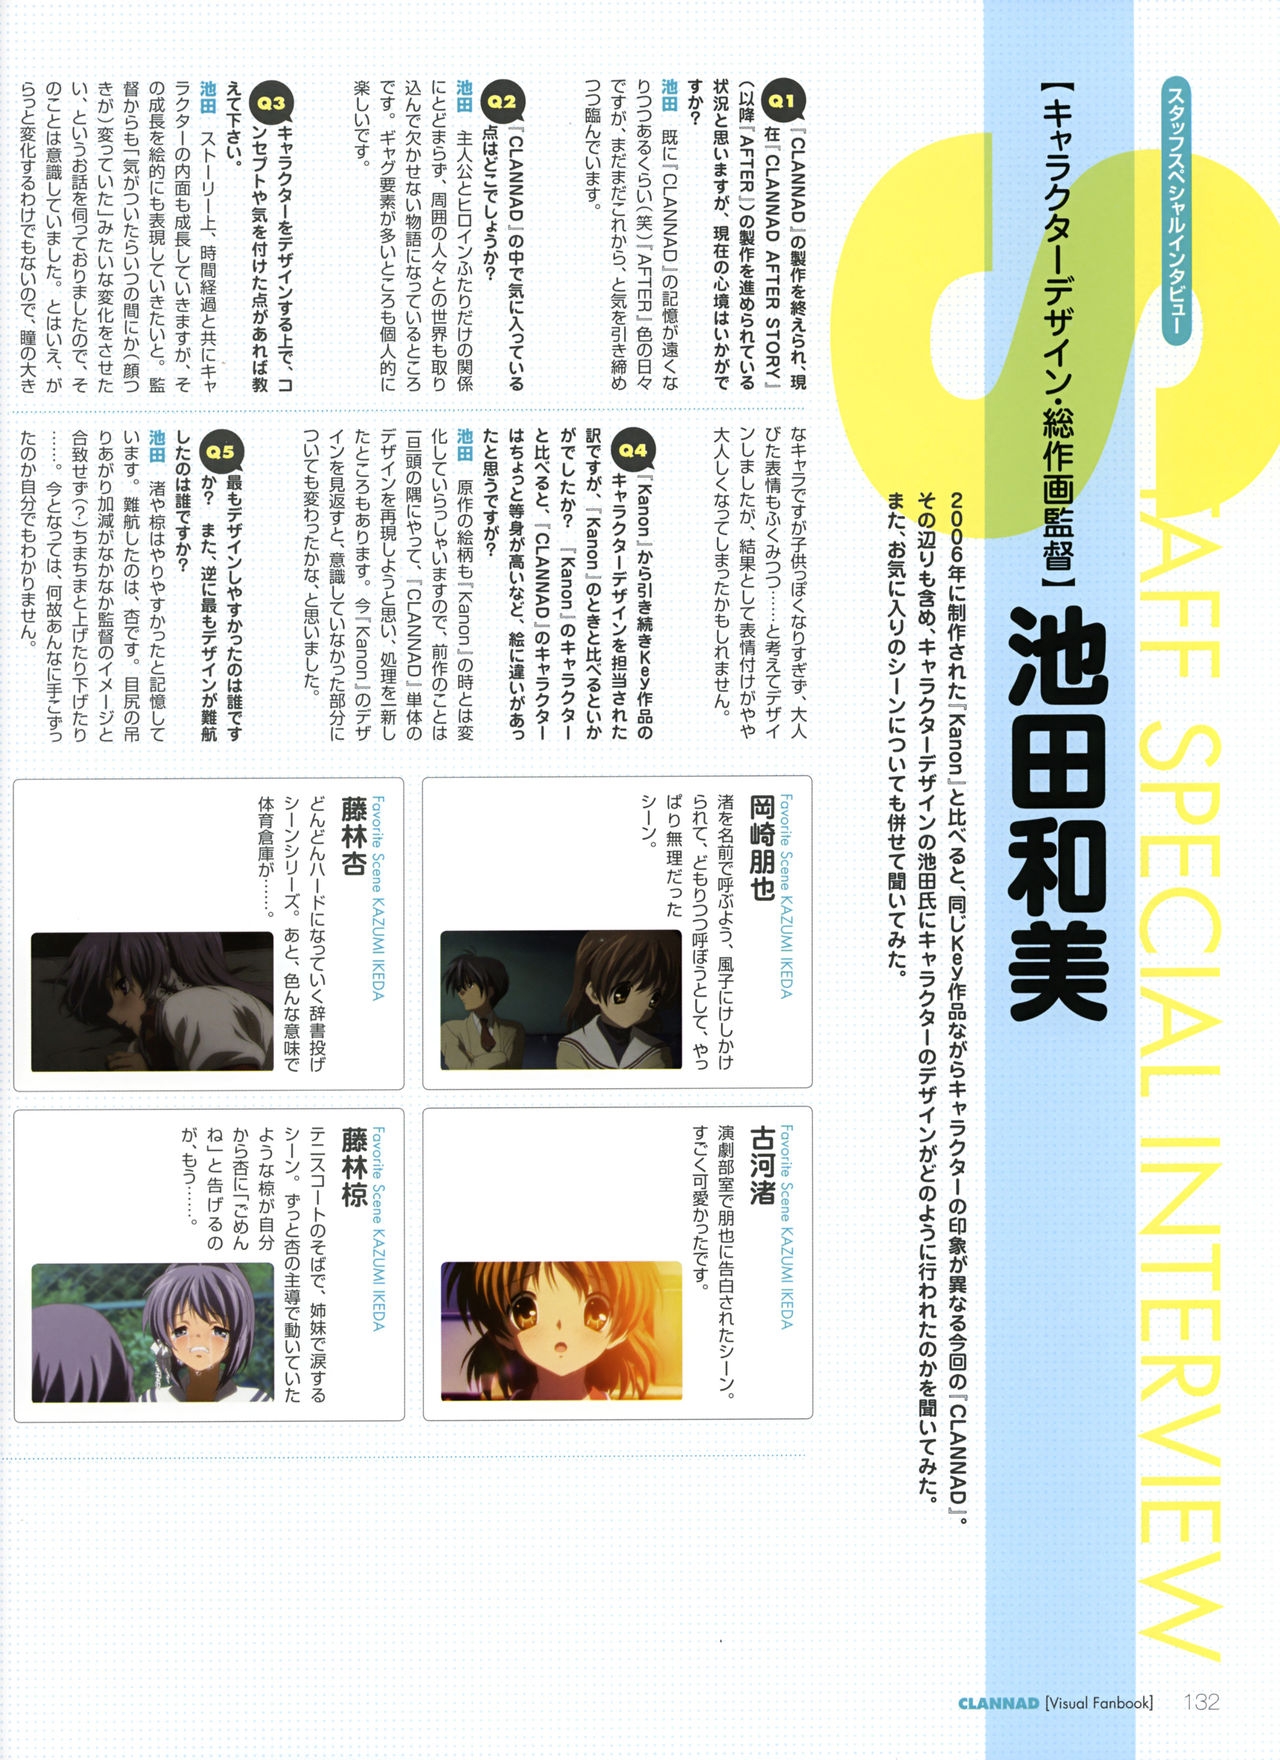 Clannad TV Animation Visual Fan Book 135